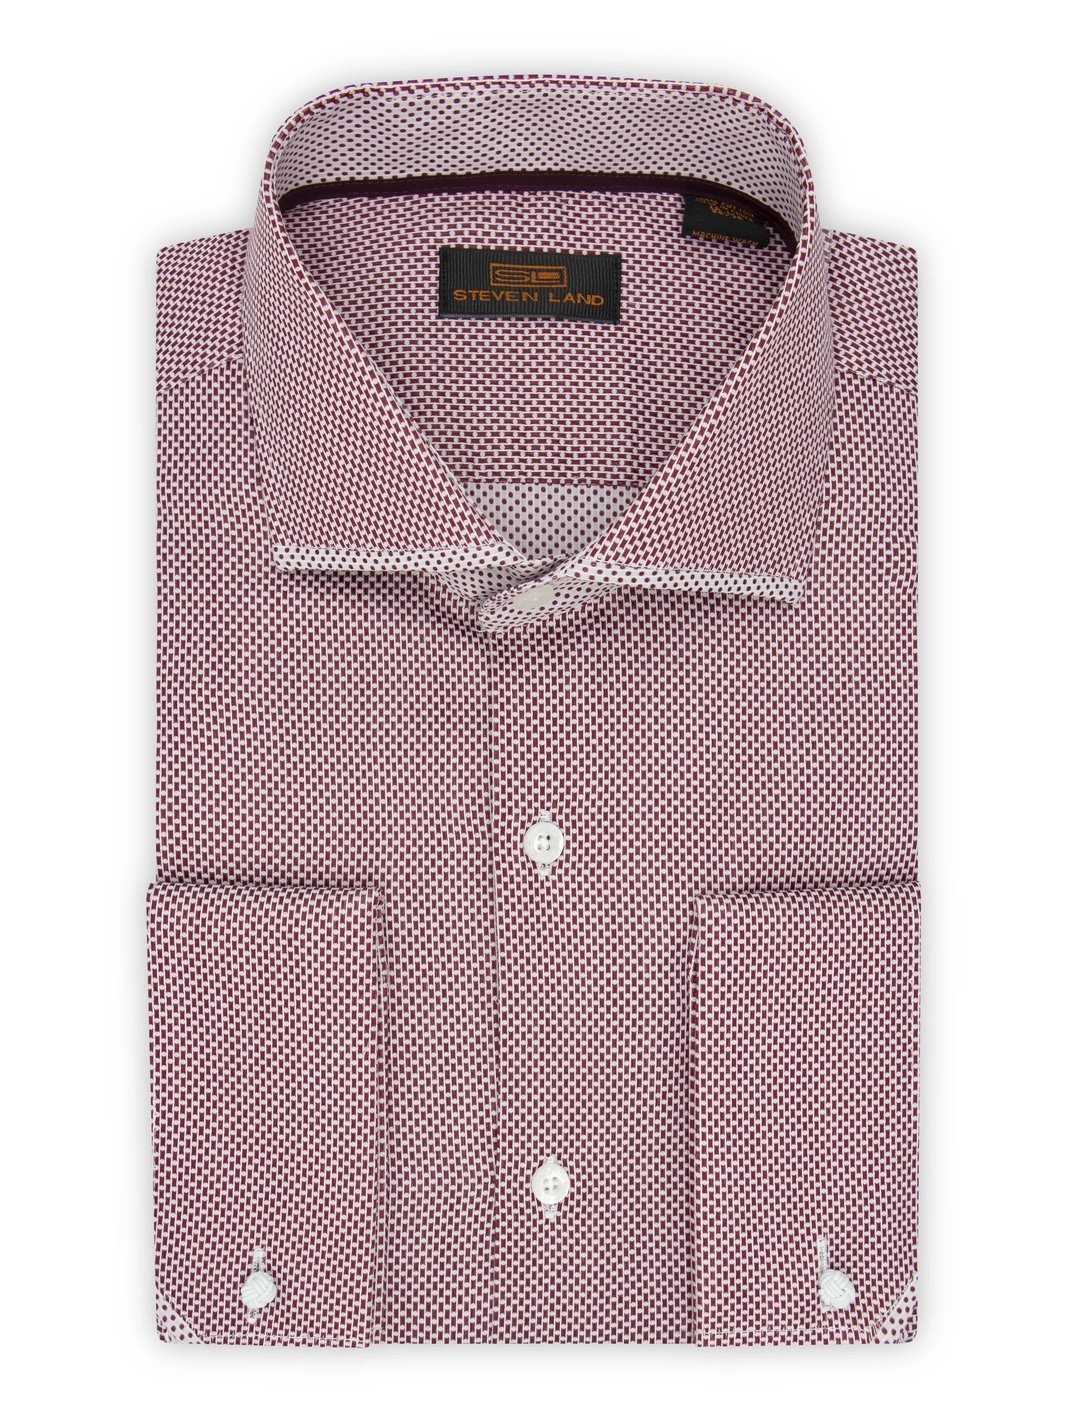 Steven Land SHIRTS Steven Land Mens Burgundy Spread Collar French Cuff 100% Cotton Dress Shirt